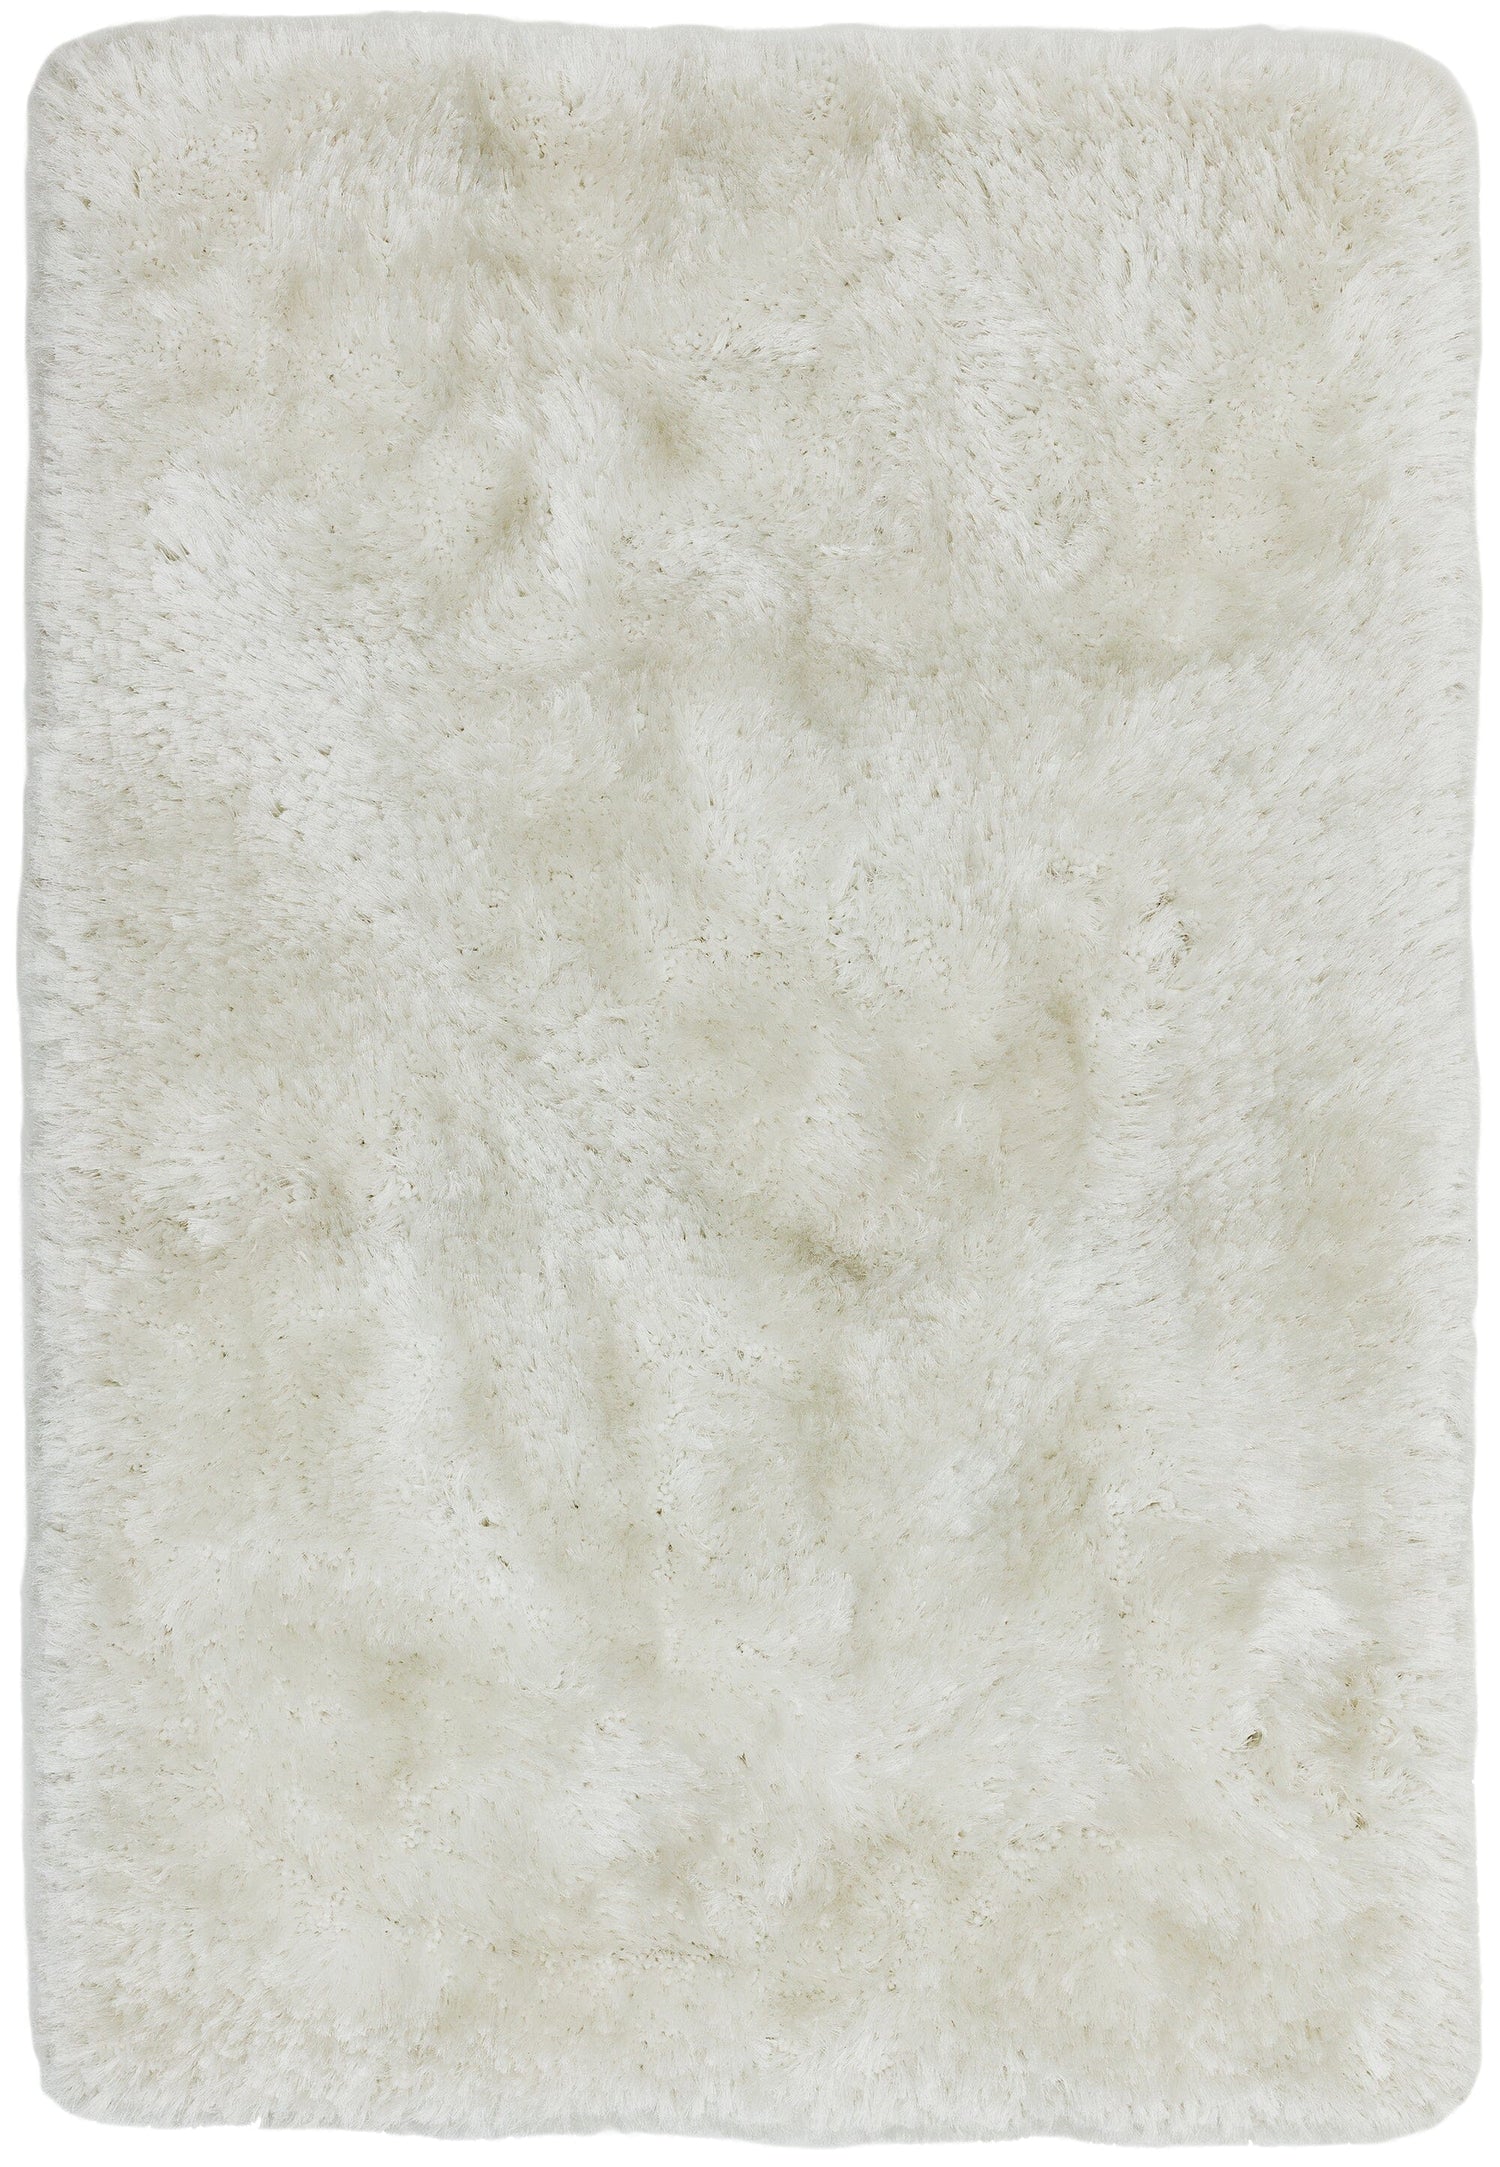  Asiatic Carpets-Asiatic Carpets Plush Hand Woven Rug White - 140 x 200cm-Cream, White 549 